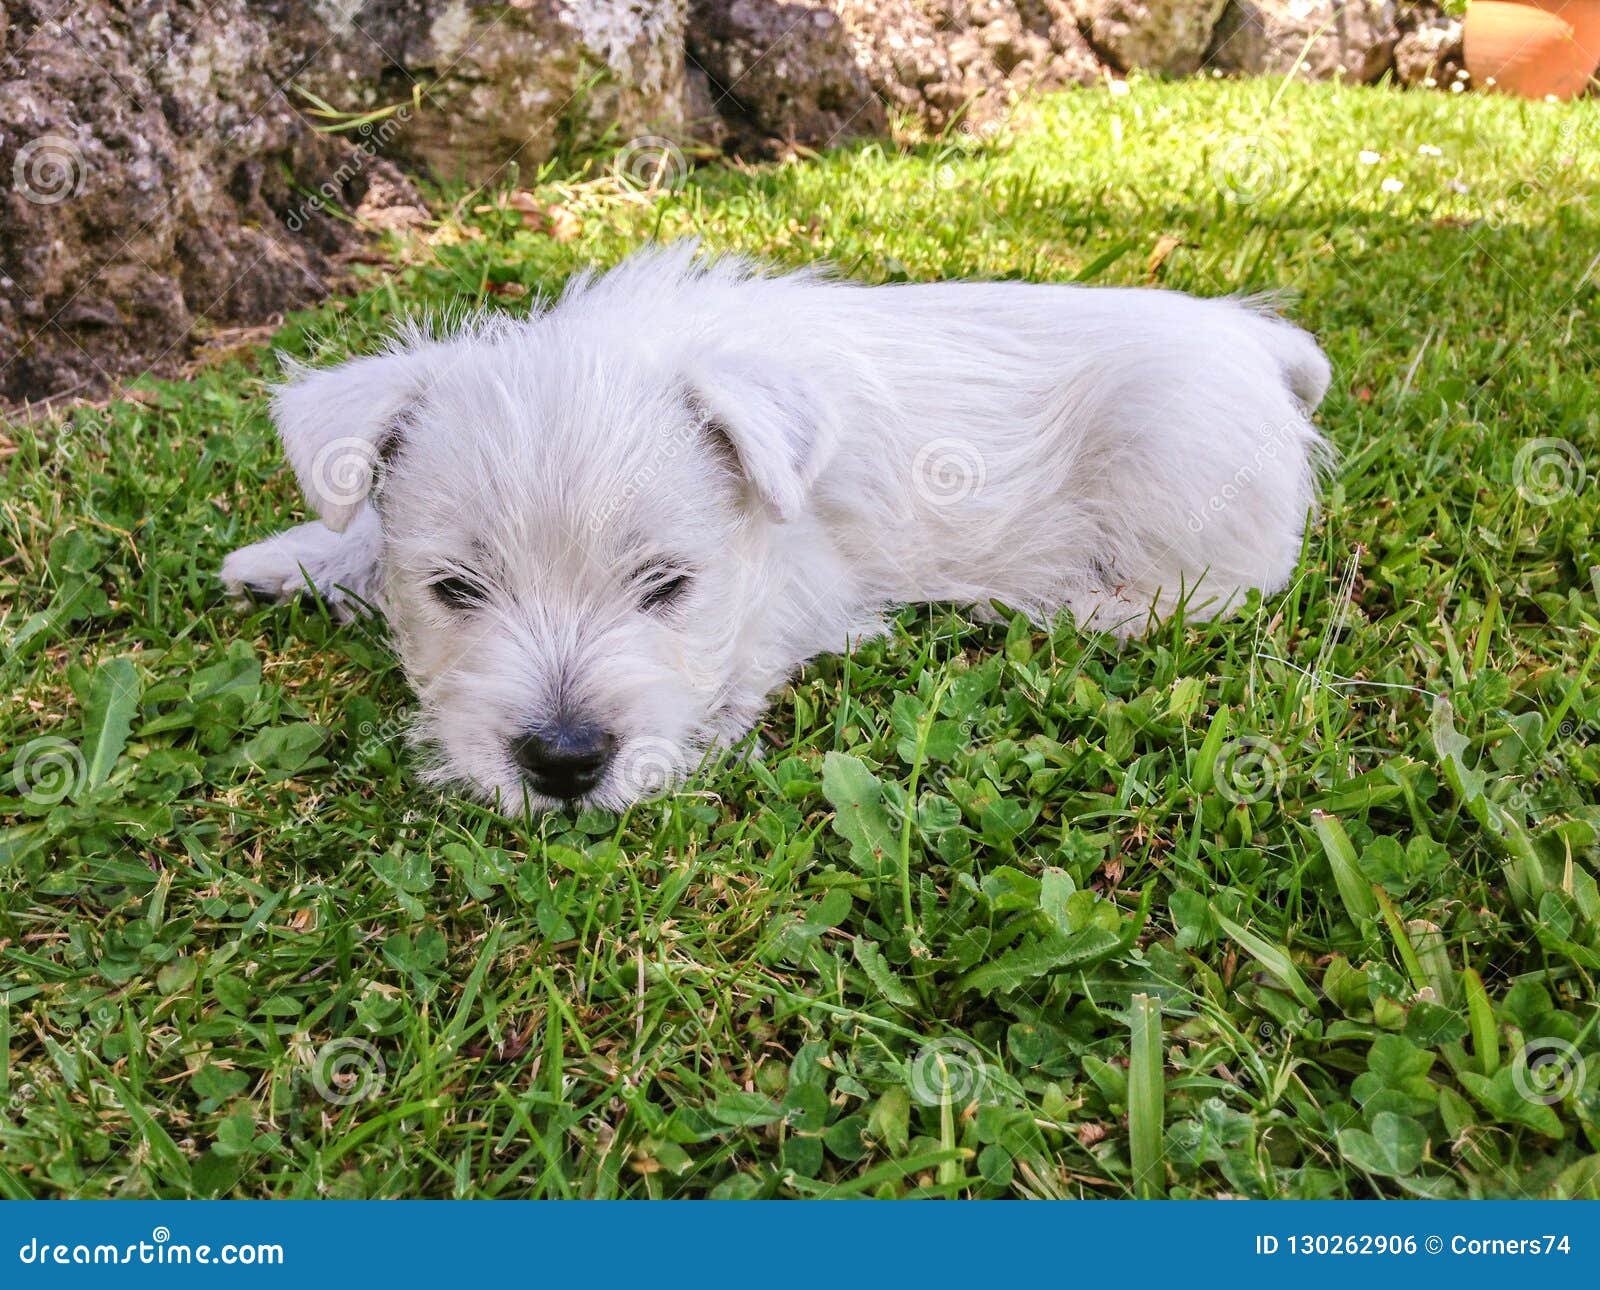 west highland white terrier dog breed